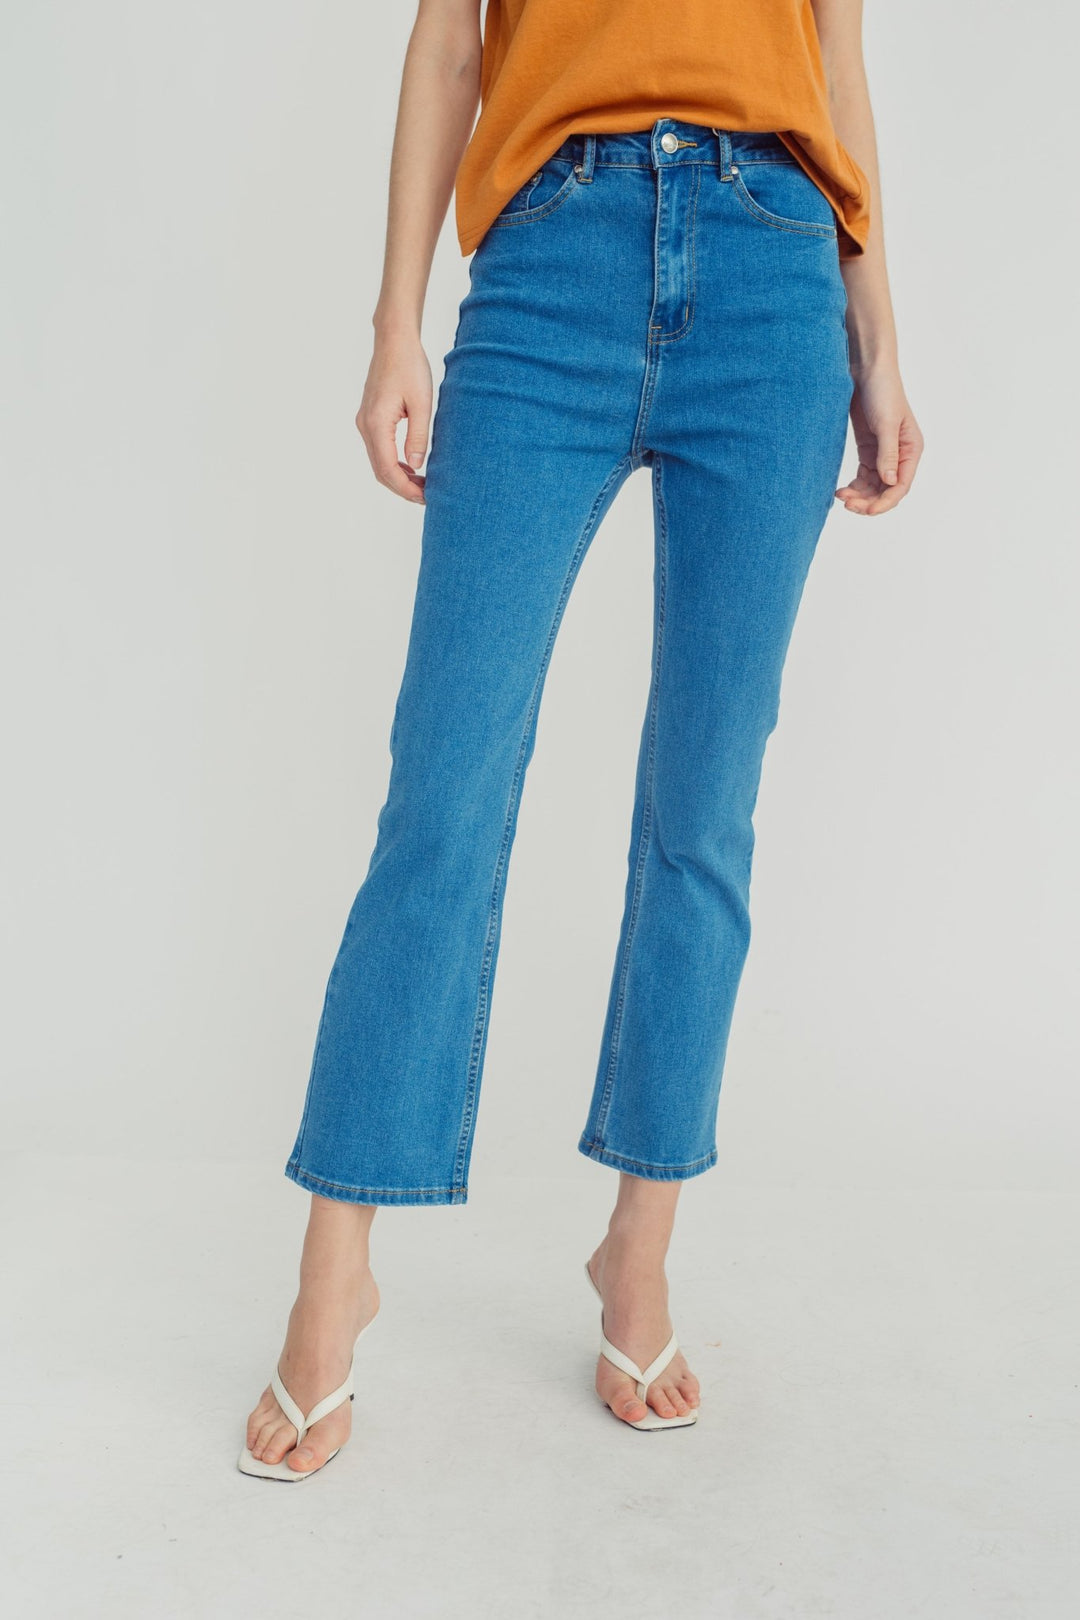 Medium Blue Women's Slim Flared High Five Pocket Jeans - Mossimo PH